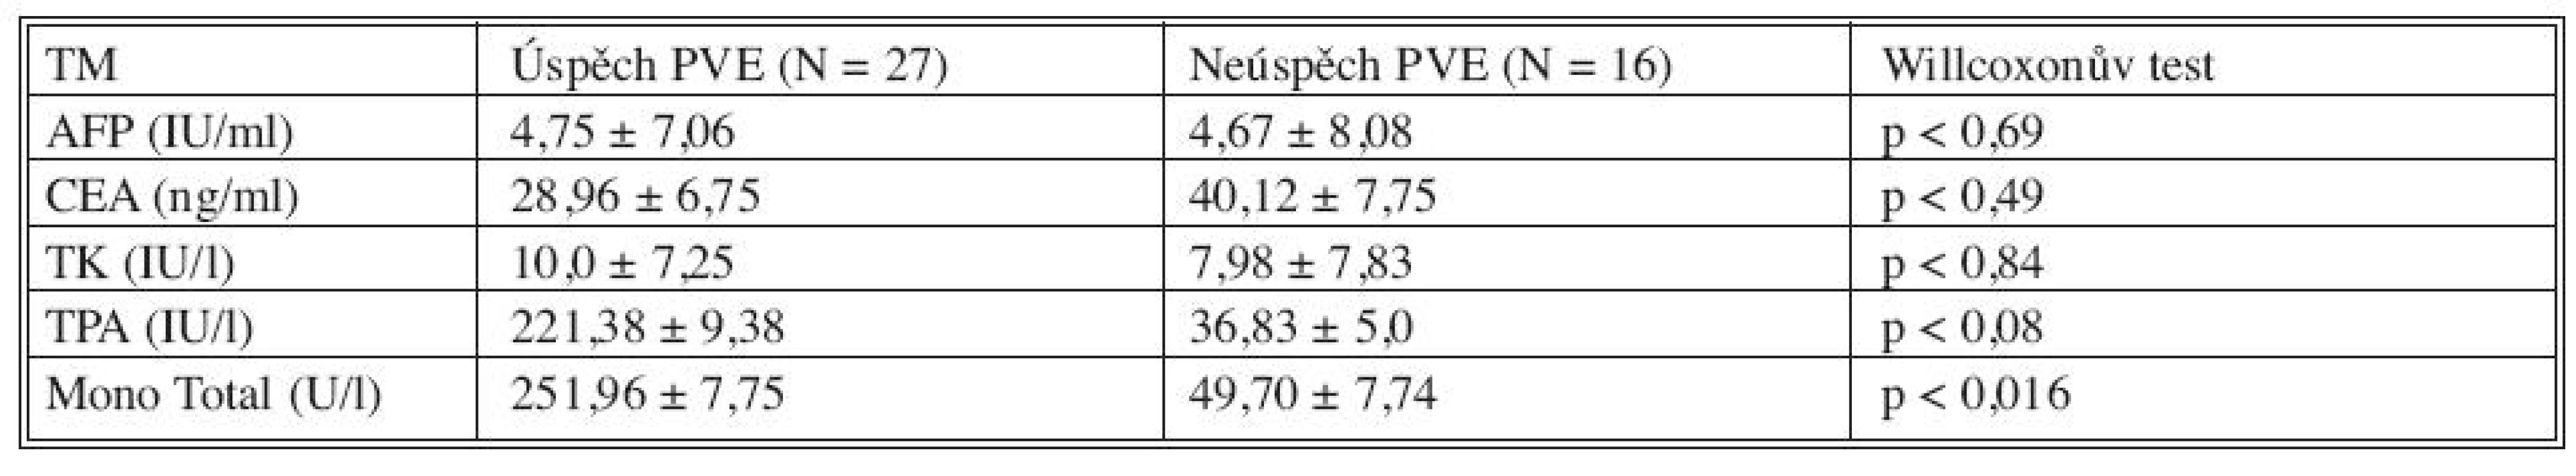 Sérové hladiny biomarkerů před PVE v korelaci s výsledkem PVE
Tab. 3. Serum levels of biomarkers prior to PVE , in correlation with PVE outcome